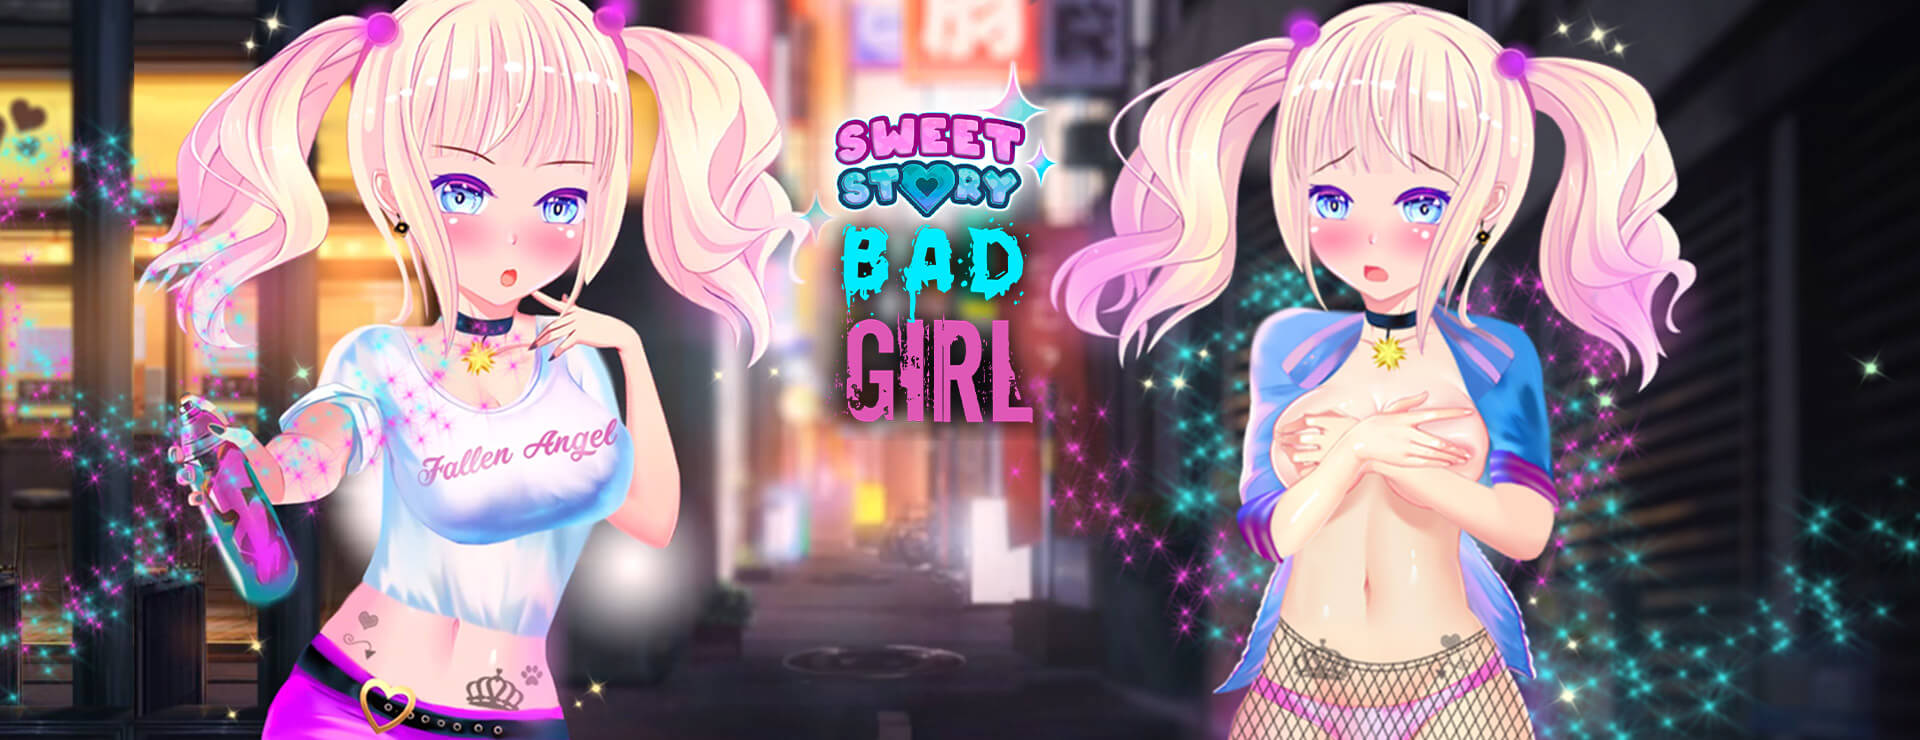 Sweet Story Bad Girl - カジュアル ゲーム